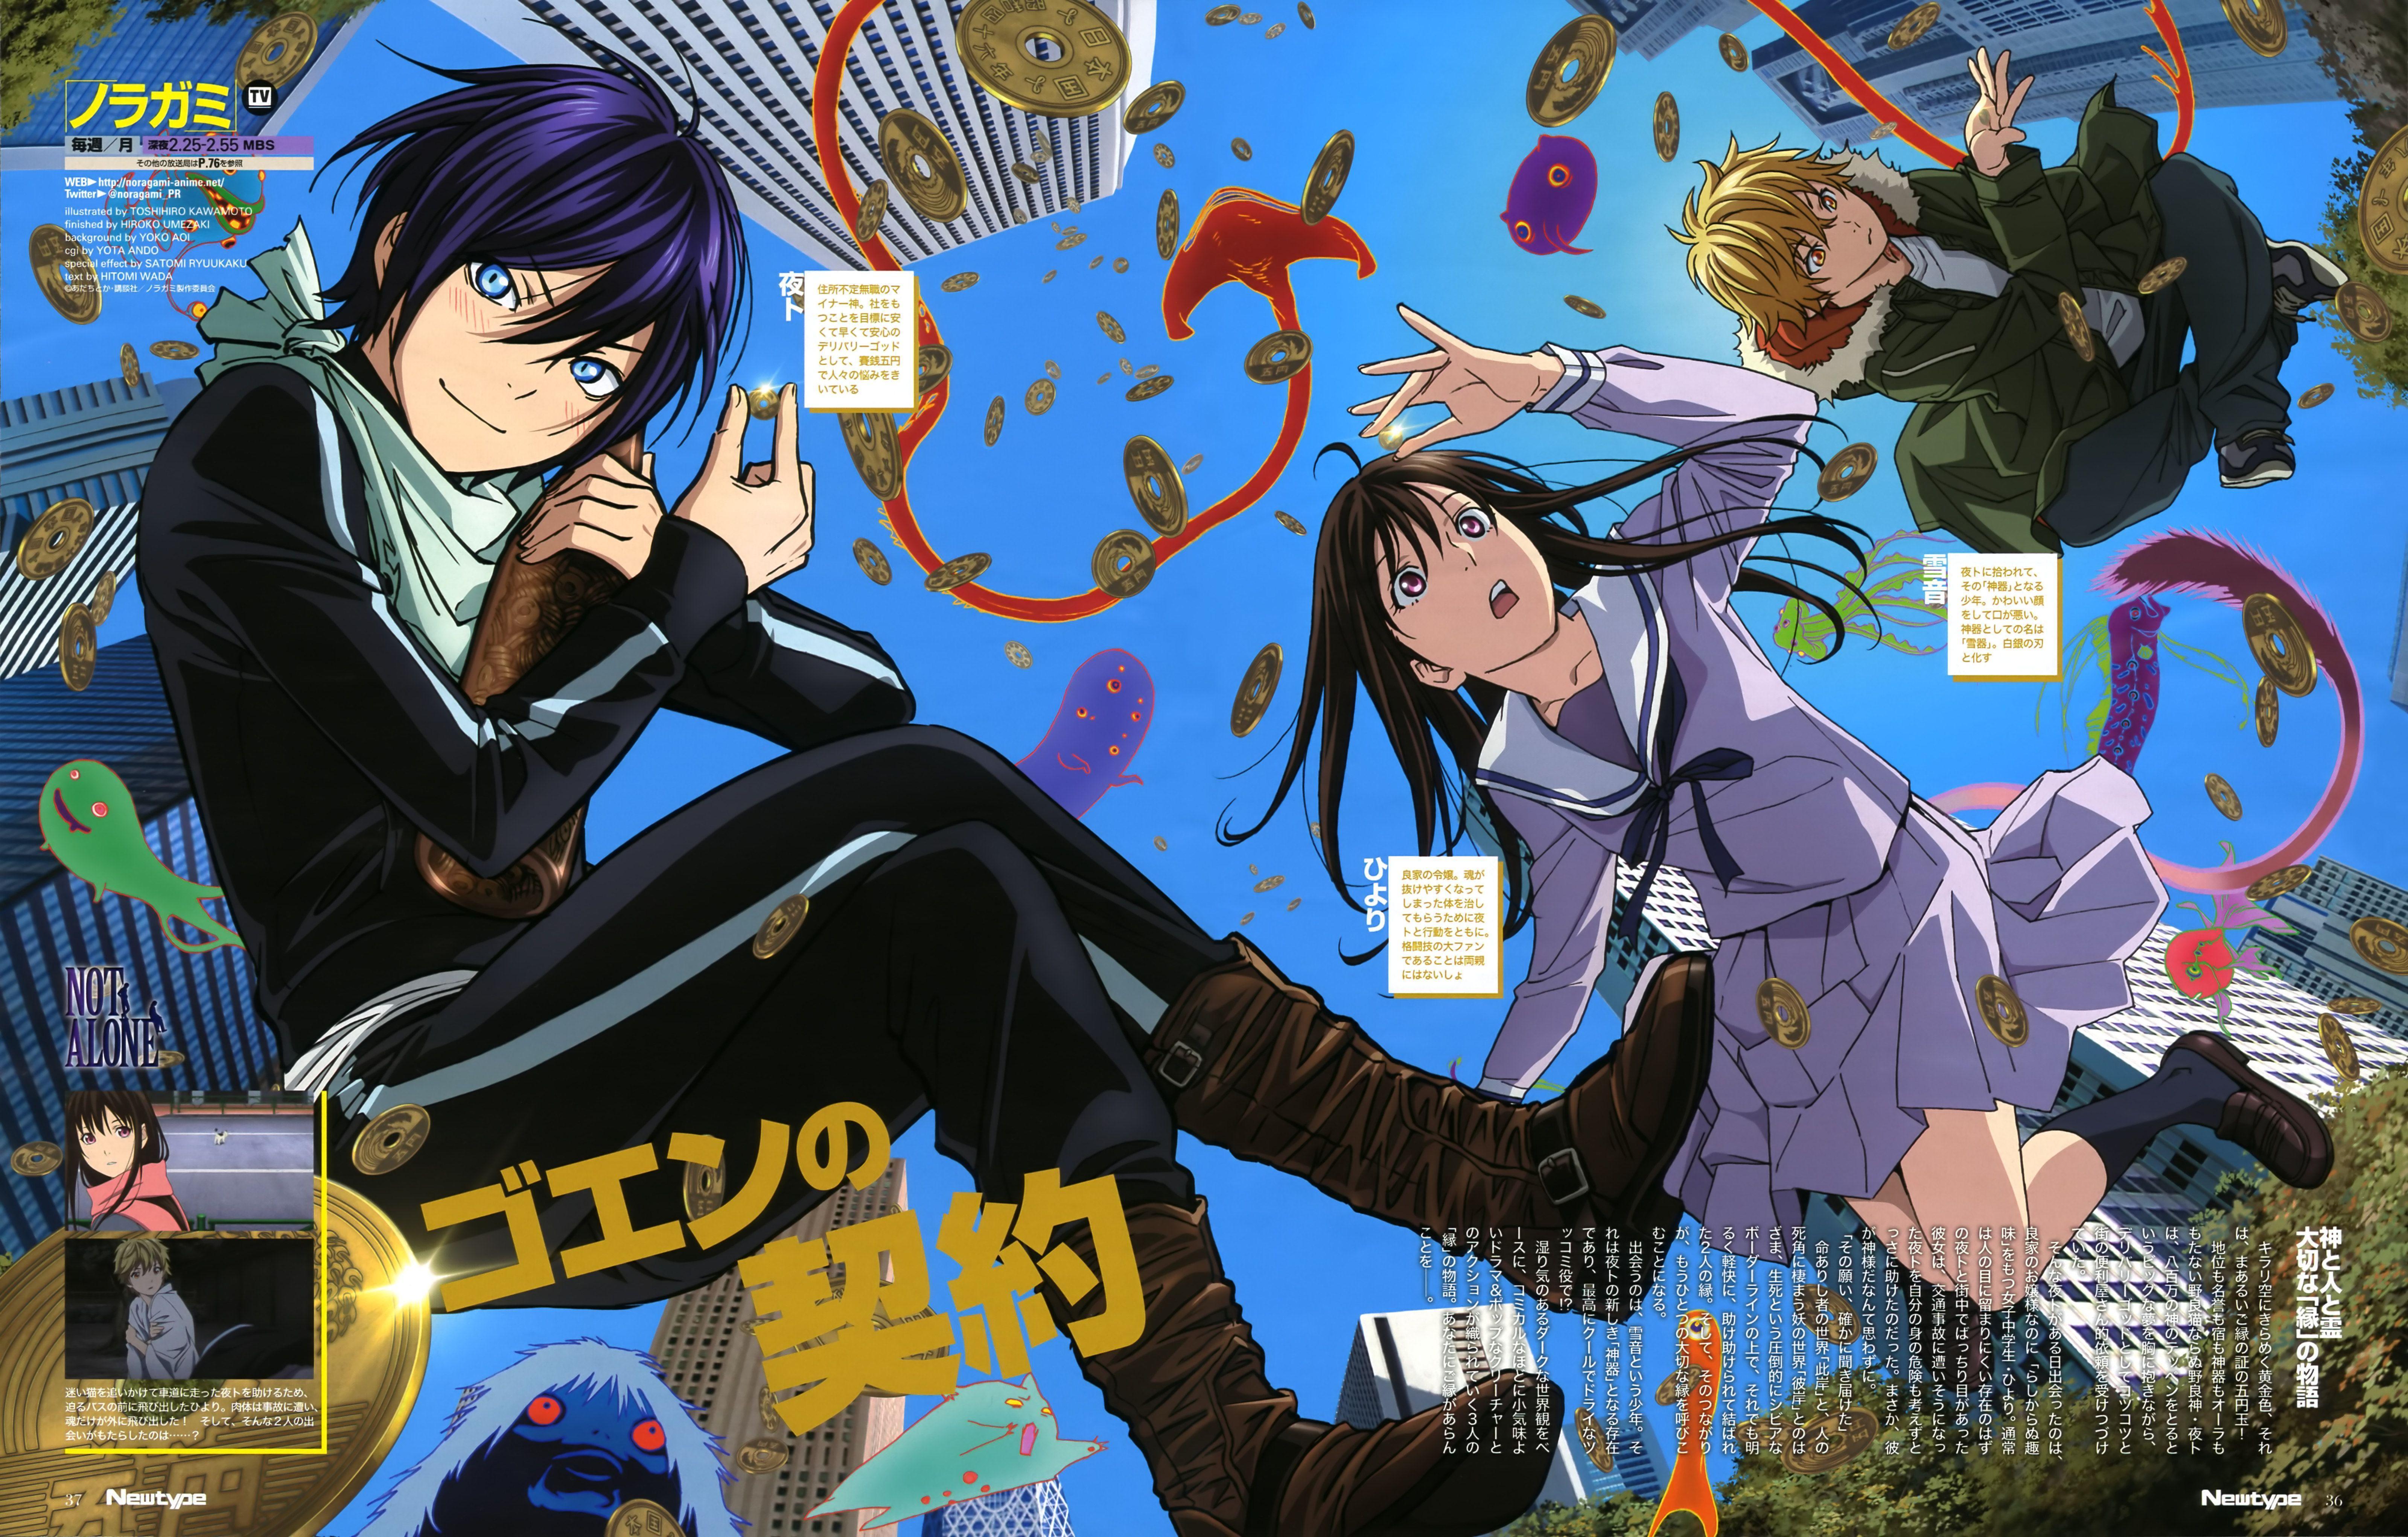 Quality Noragami Wallpaper, Anime & Manga